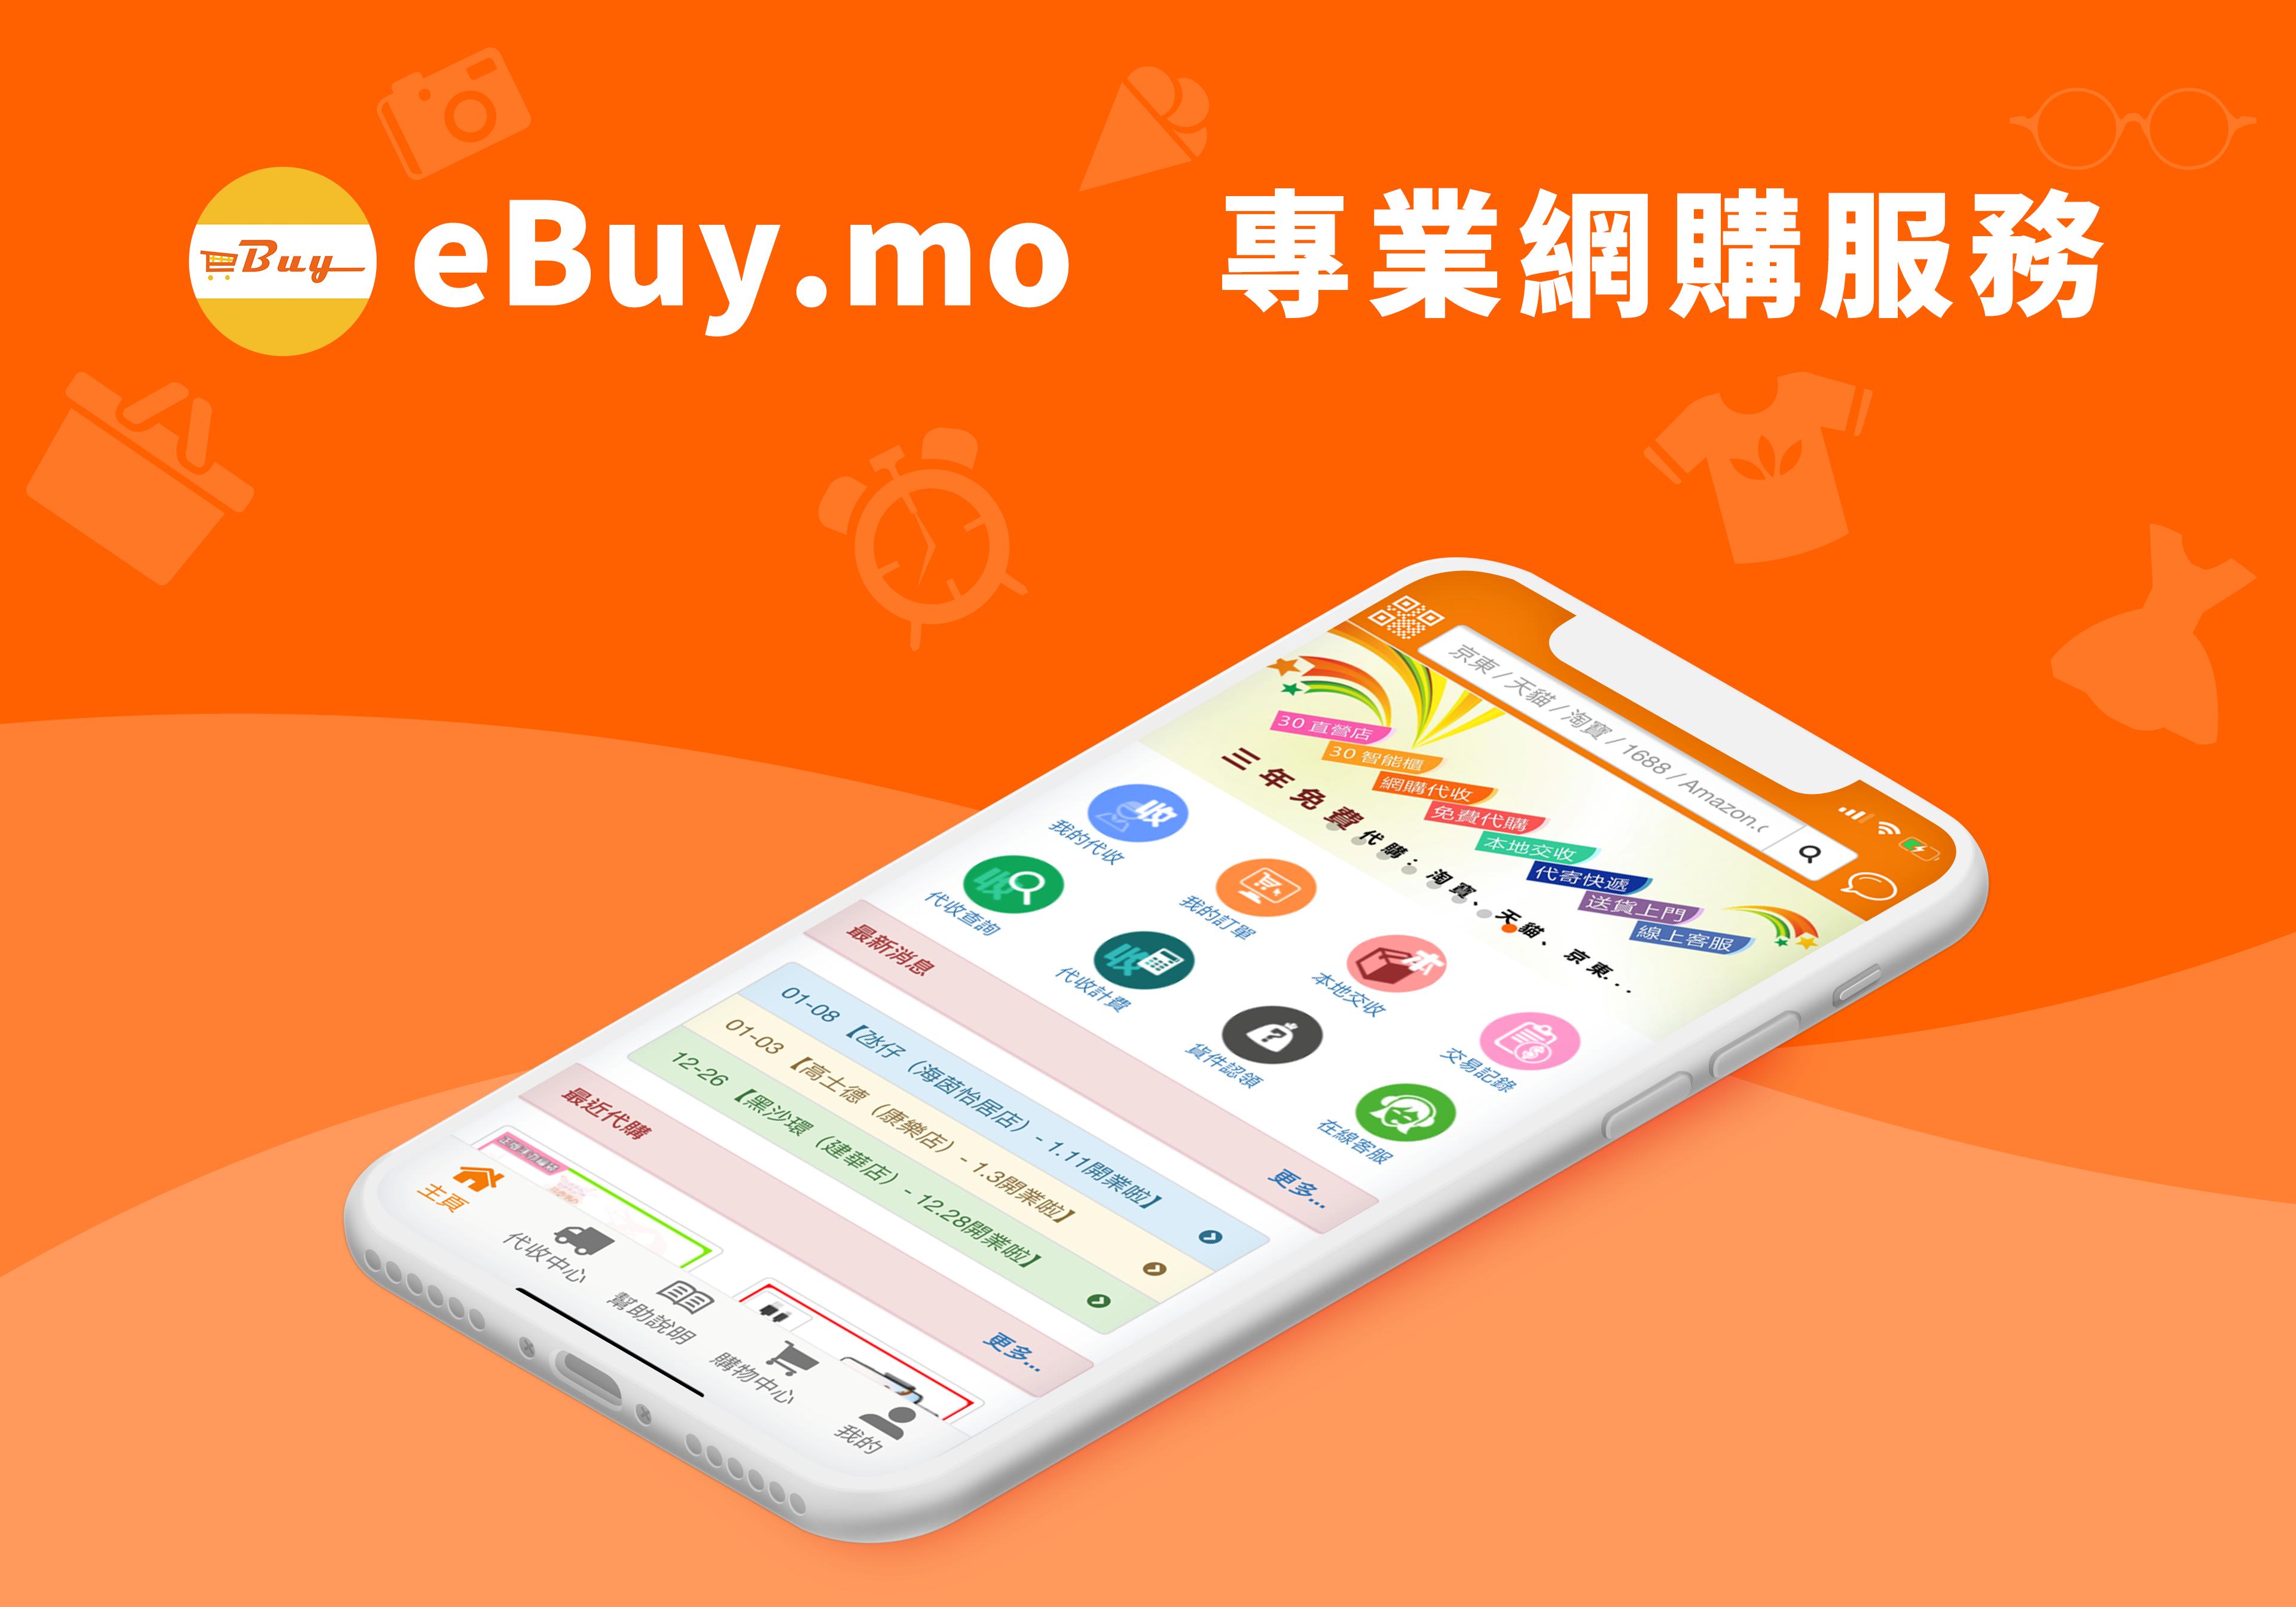 eBuy.mo 澳門易購網 2.1.4 Screenshot 1